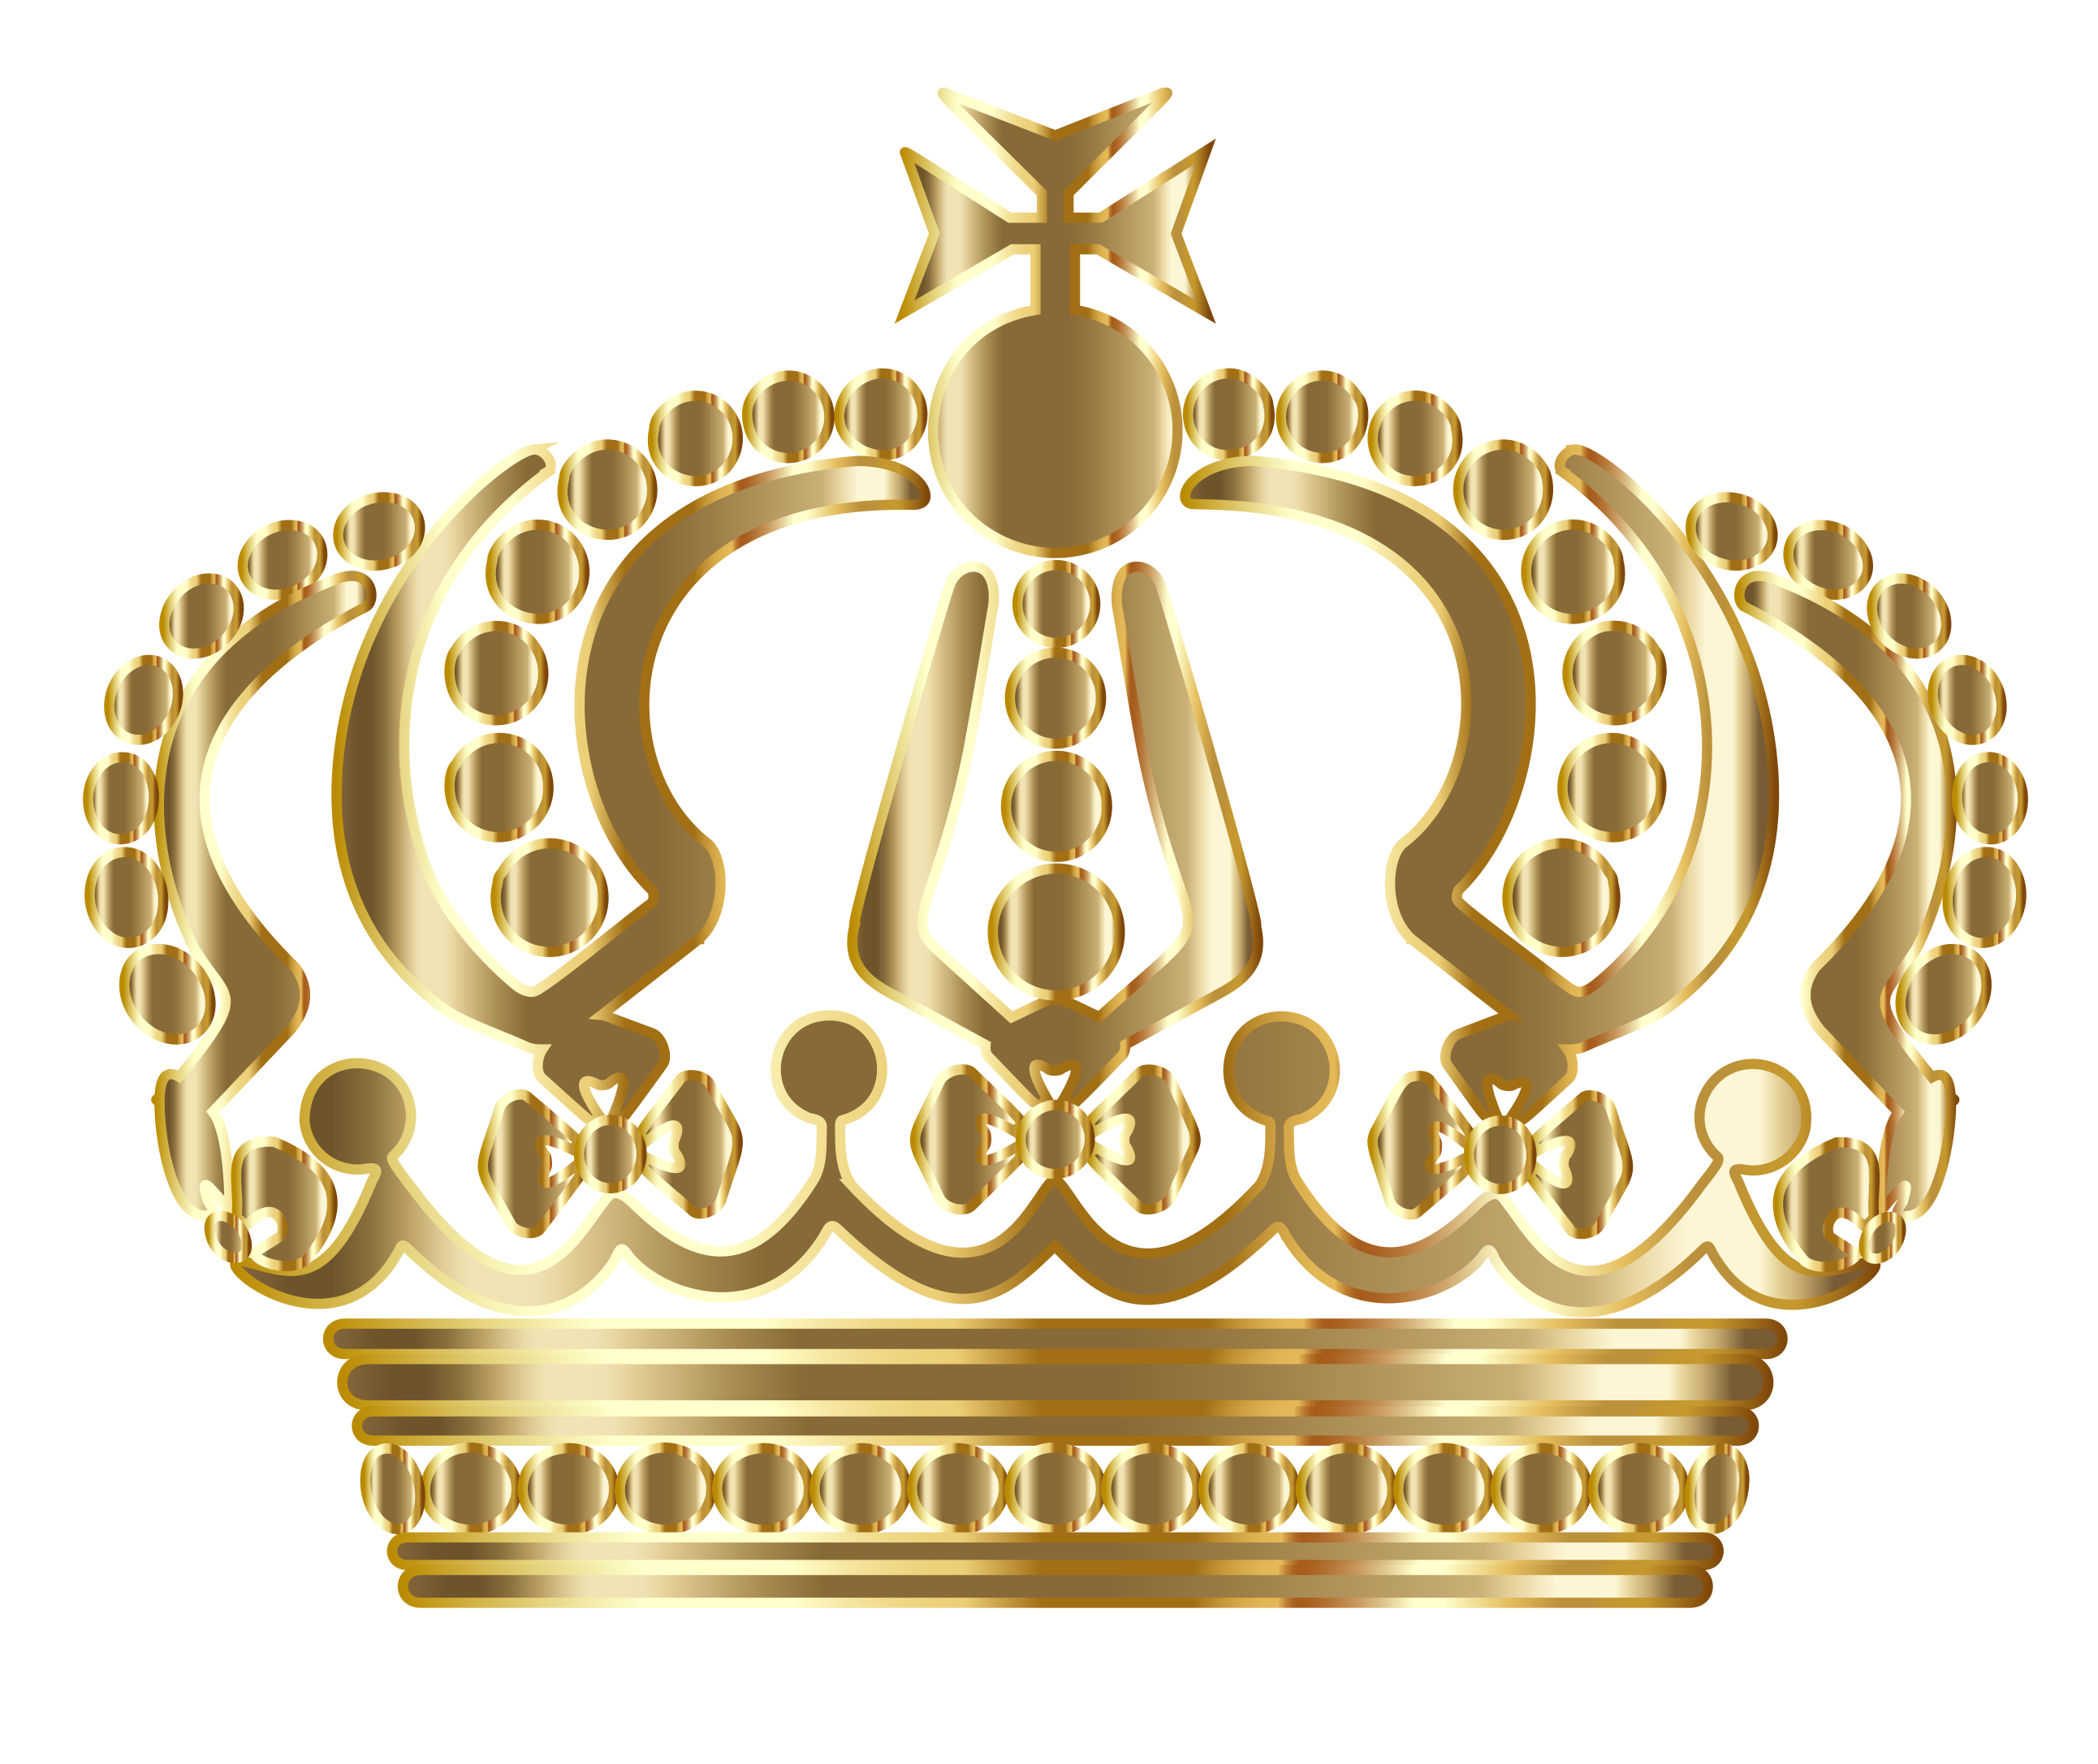 crown illustration vector download